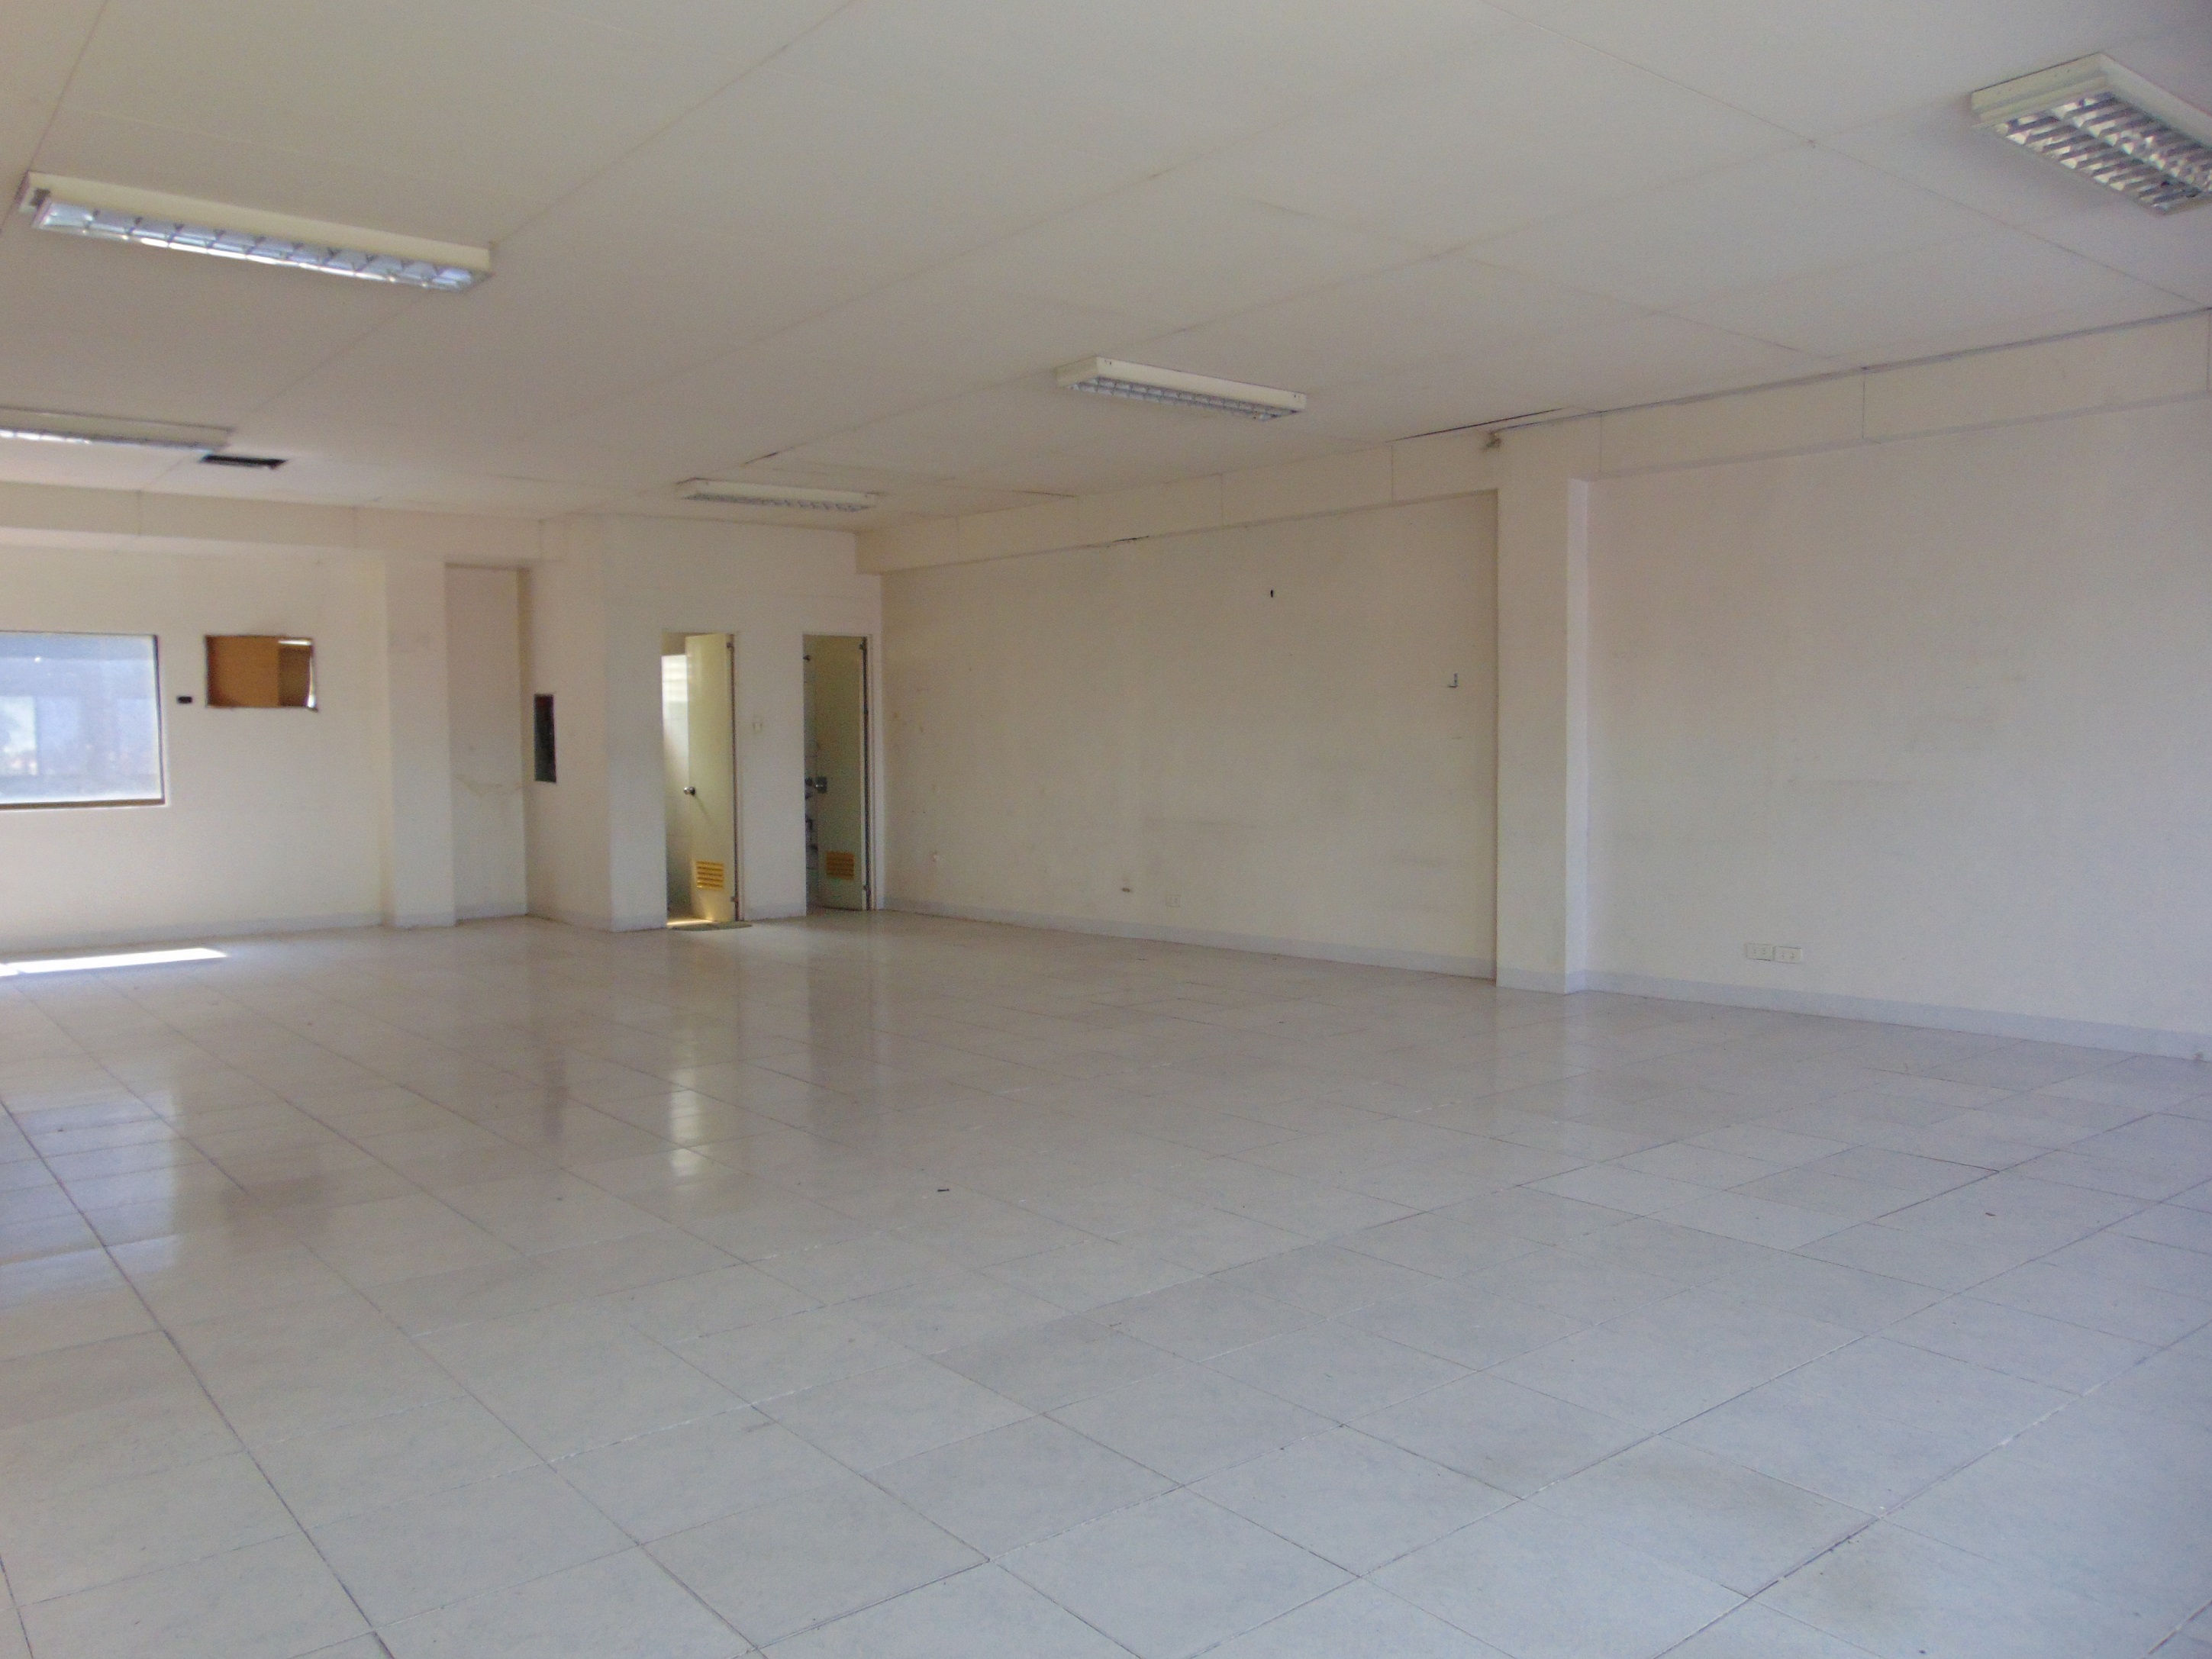 115-square-meters-office-space-located-in-mandaue-city-cebu